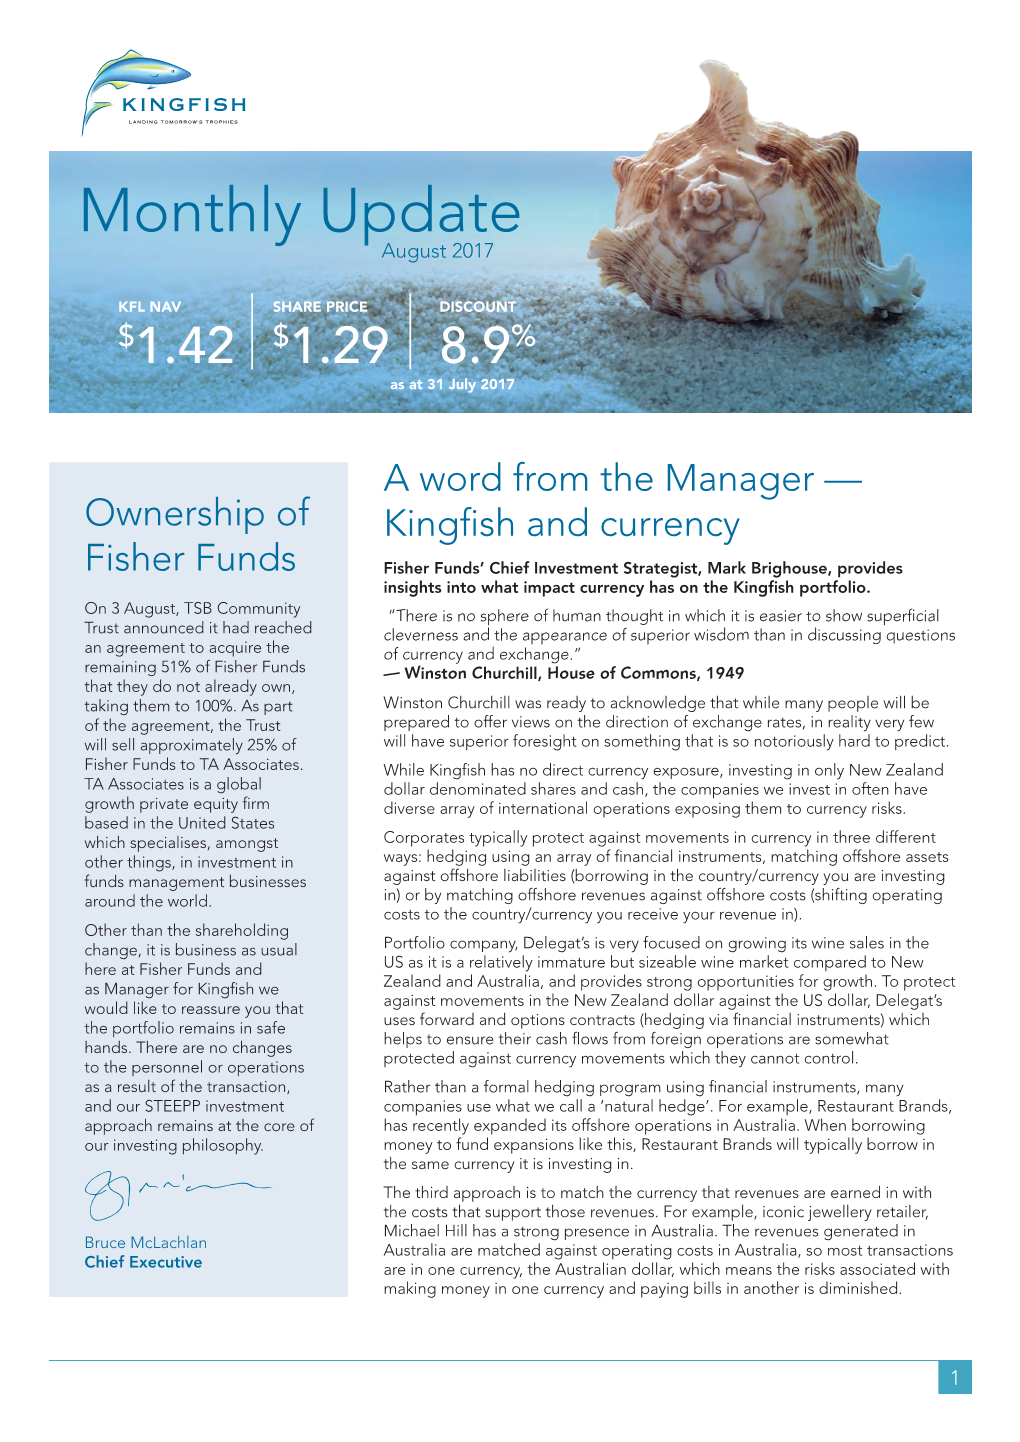 Kingfish Monthly Update